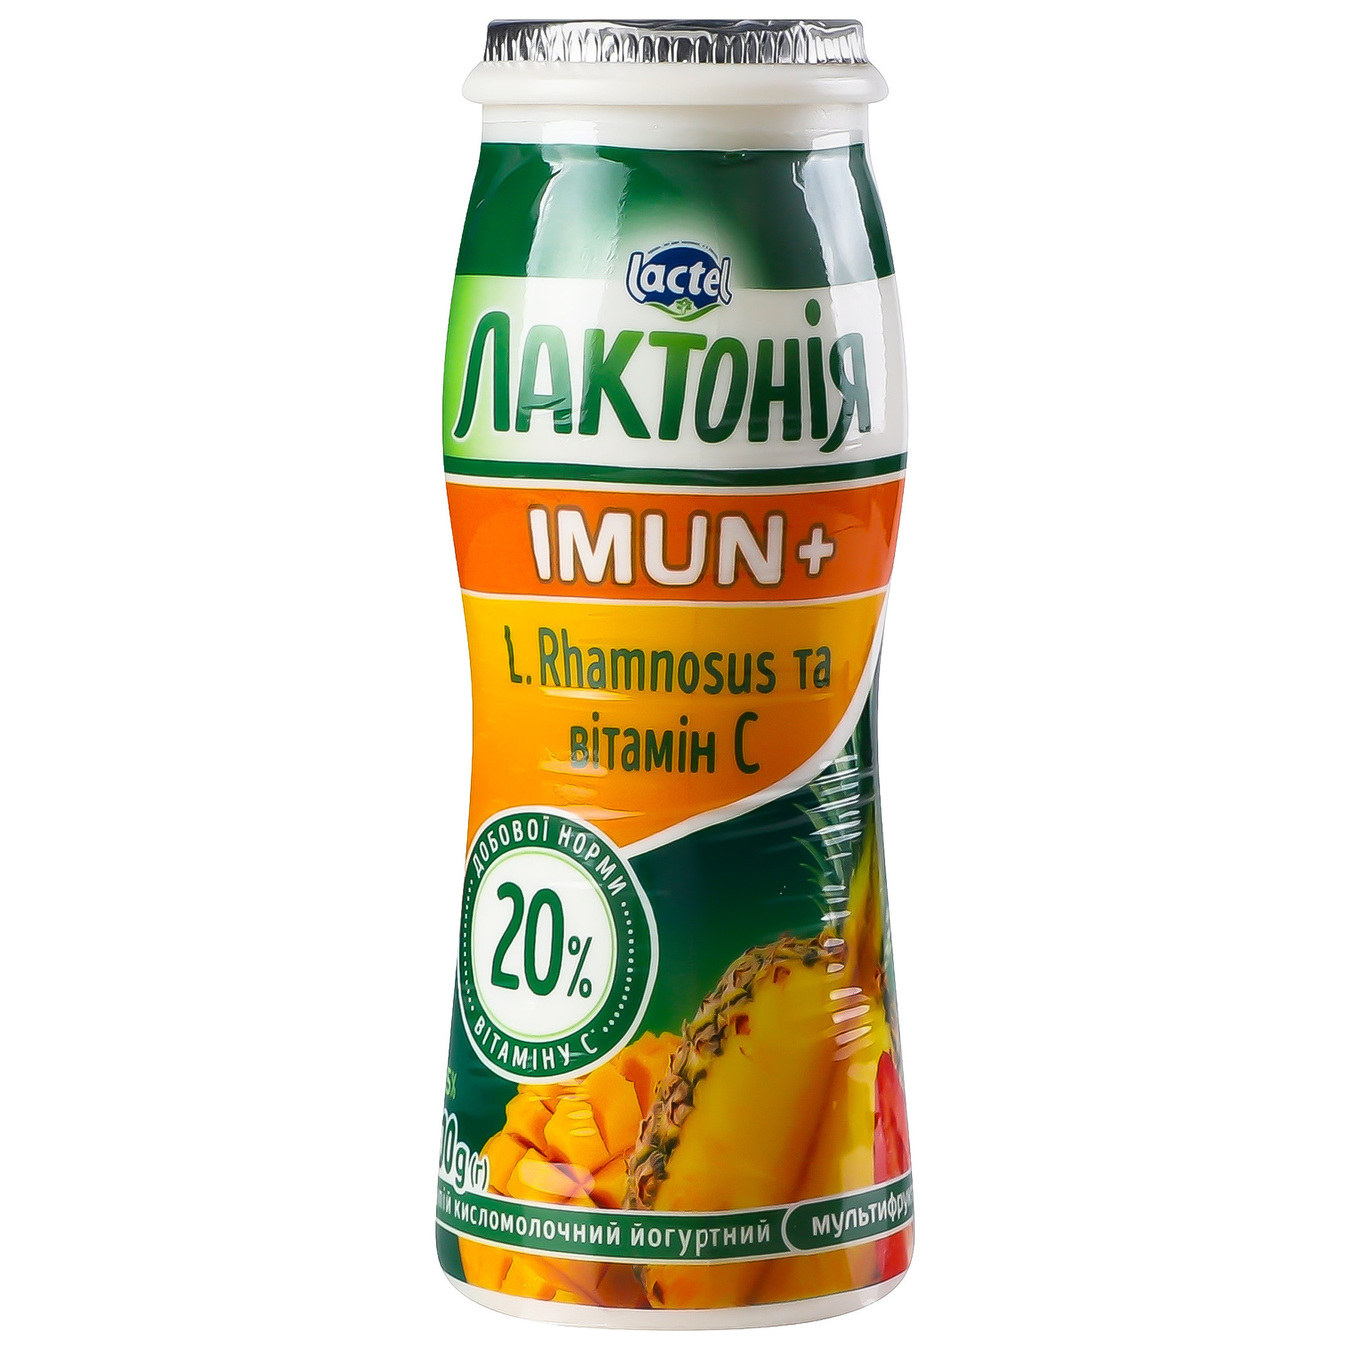 Lactonia Imun multifruit with probiotic L.Rhamnosus vitamin C Sour milk drink 1.5% 100g